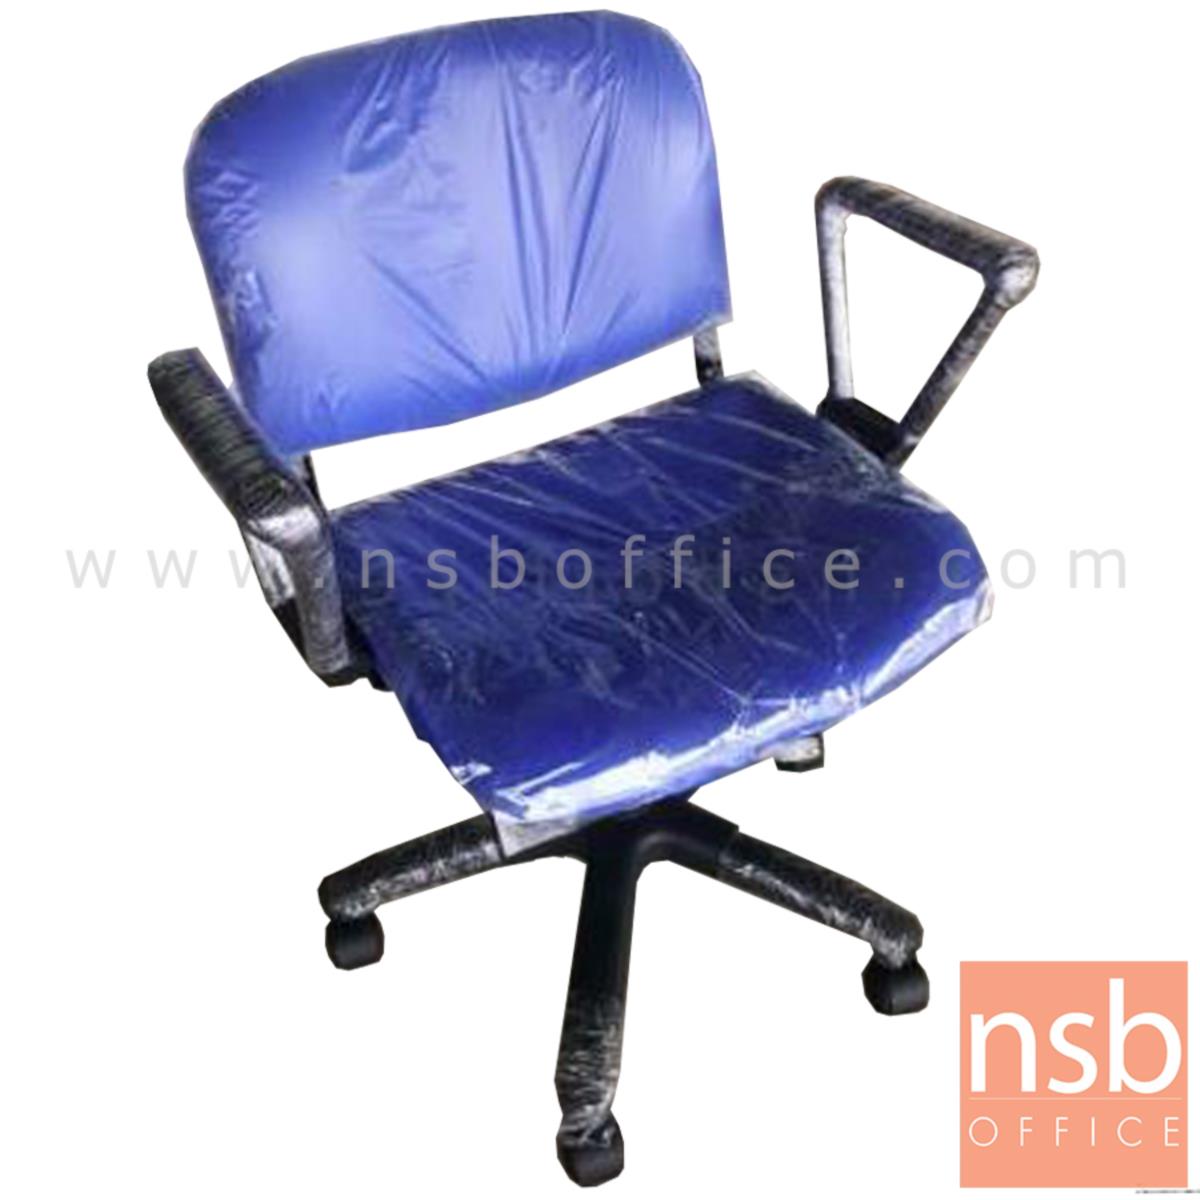 B03A485:เก้าอี้สำนักงานเบาะใหญ่ รุ่น Bluebonnet (บลูบอนเน็ต)  โช๊คแก๊ส มีก้อนโยก ขาพลาสติก